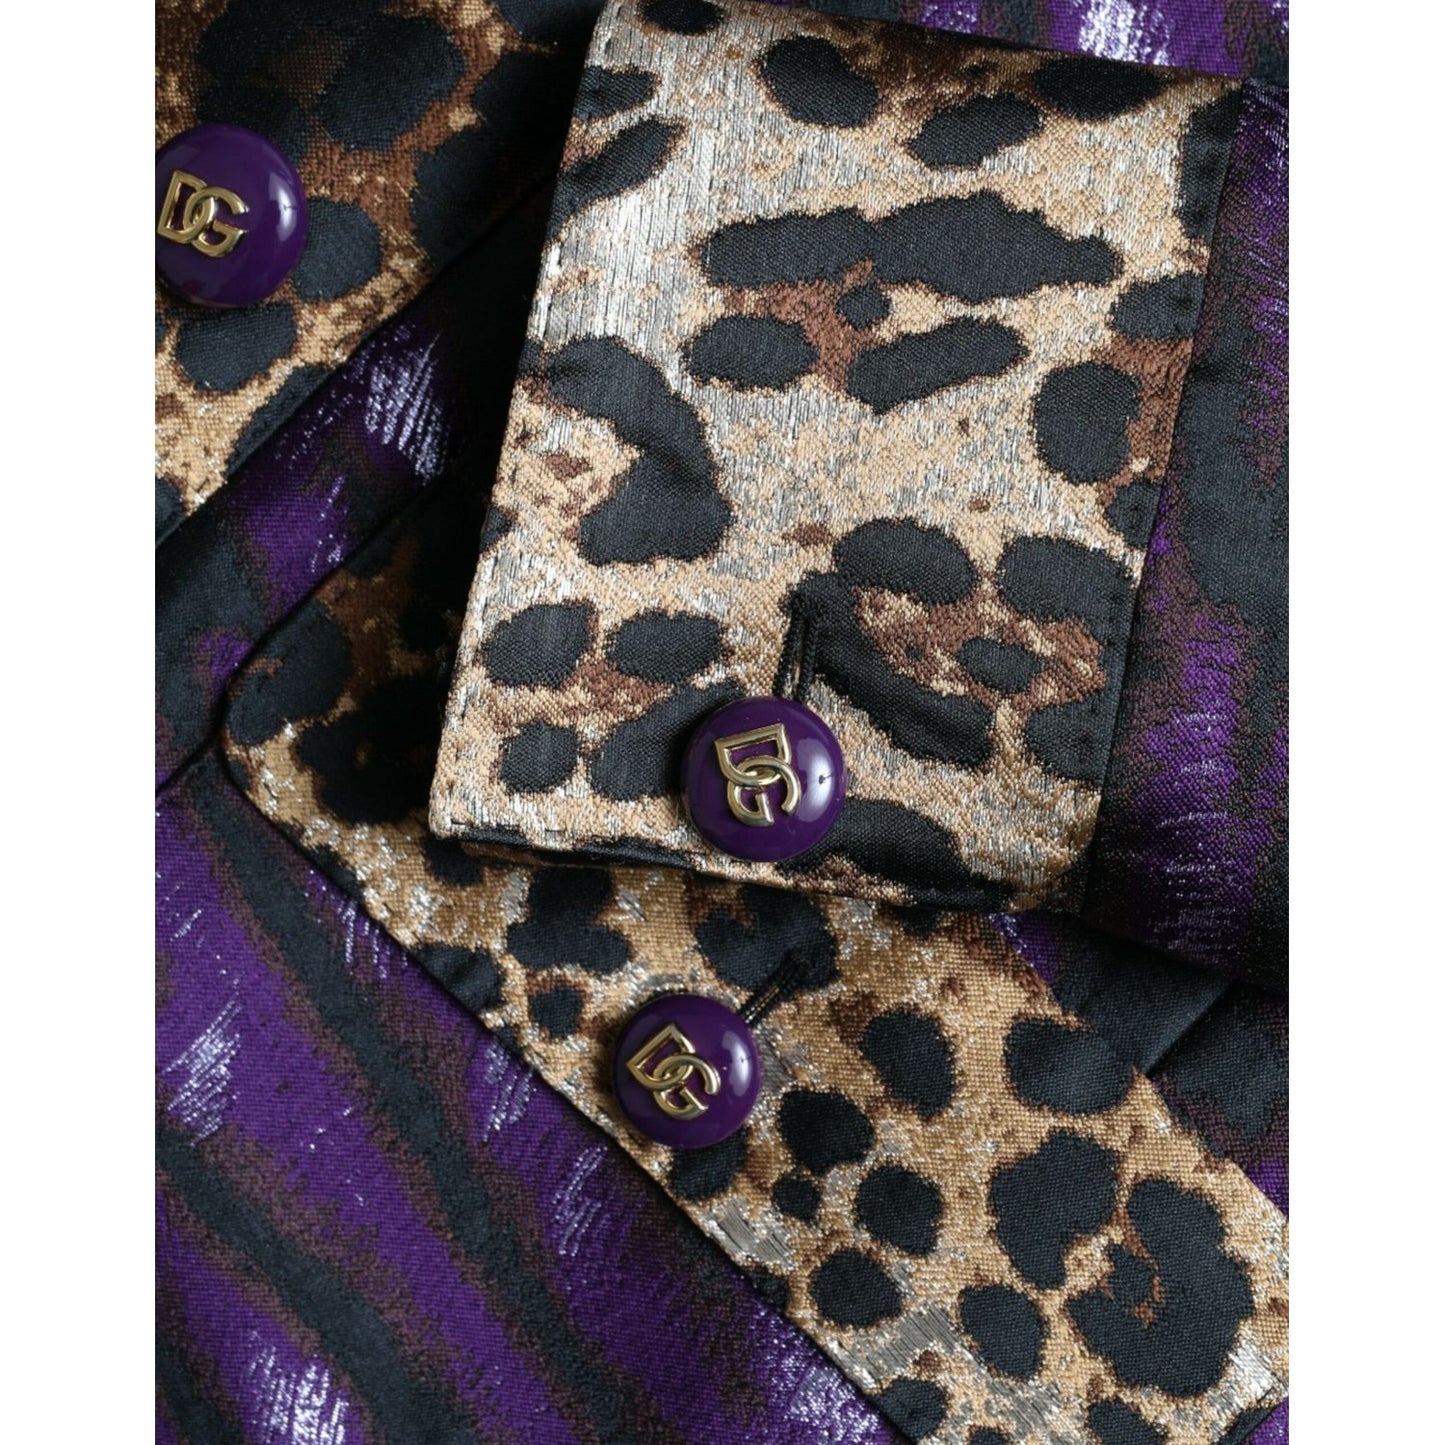 Dolce & Gabbana Exquisite Jacquard Trench With Tiger Motif purple-lame-jacquard-tiger-print-coat-jacket 465A9006-BG-scaled-9e356ce7-2e0.jpg